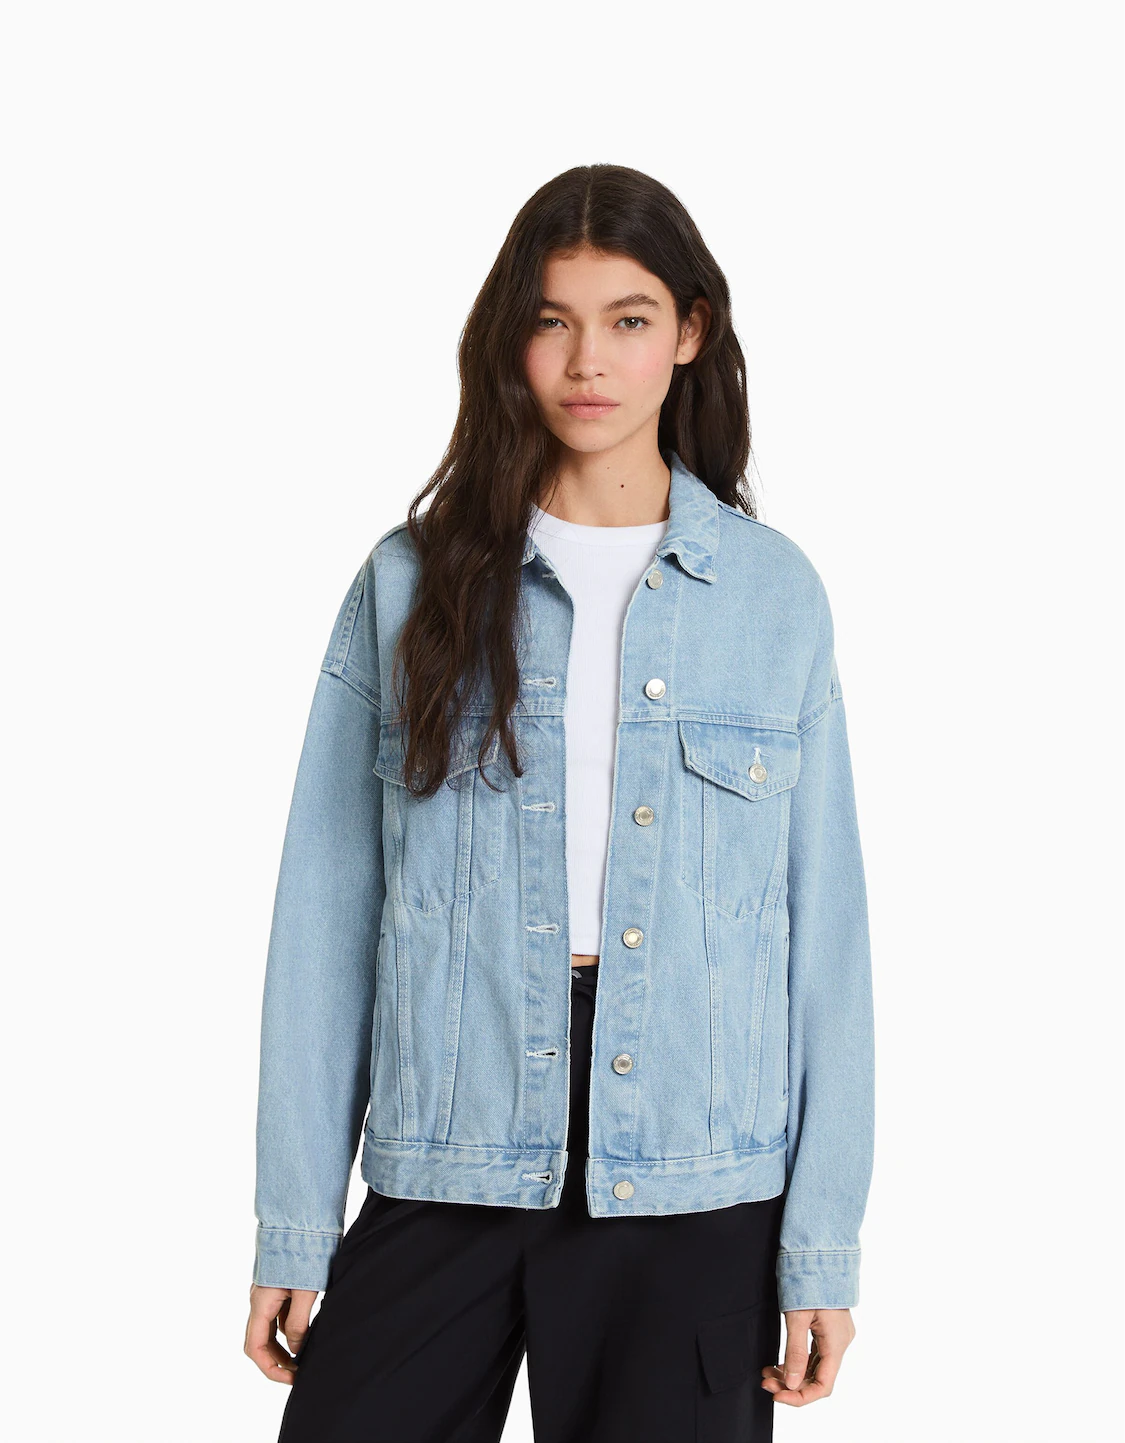 Winkelcentrum Prestatie Saai Oversized denim jacket - Jackets - Woman | Bershka